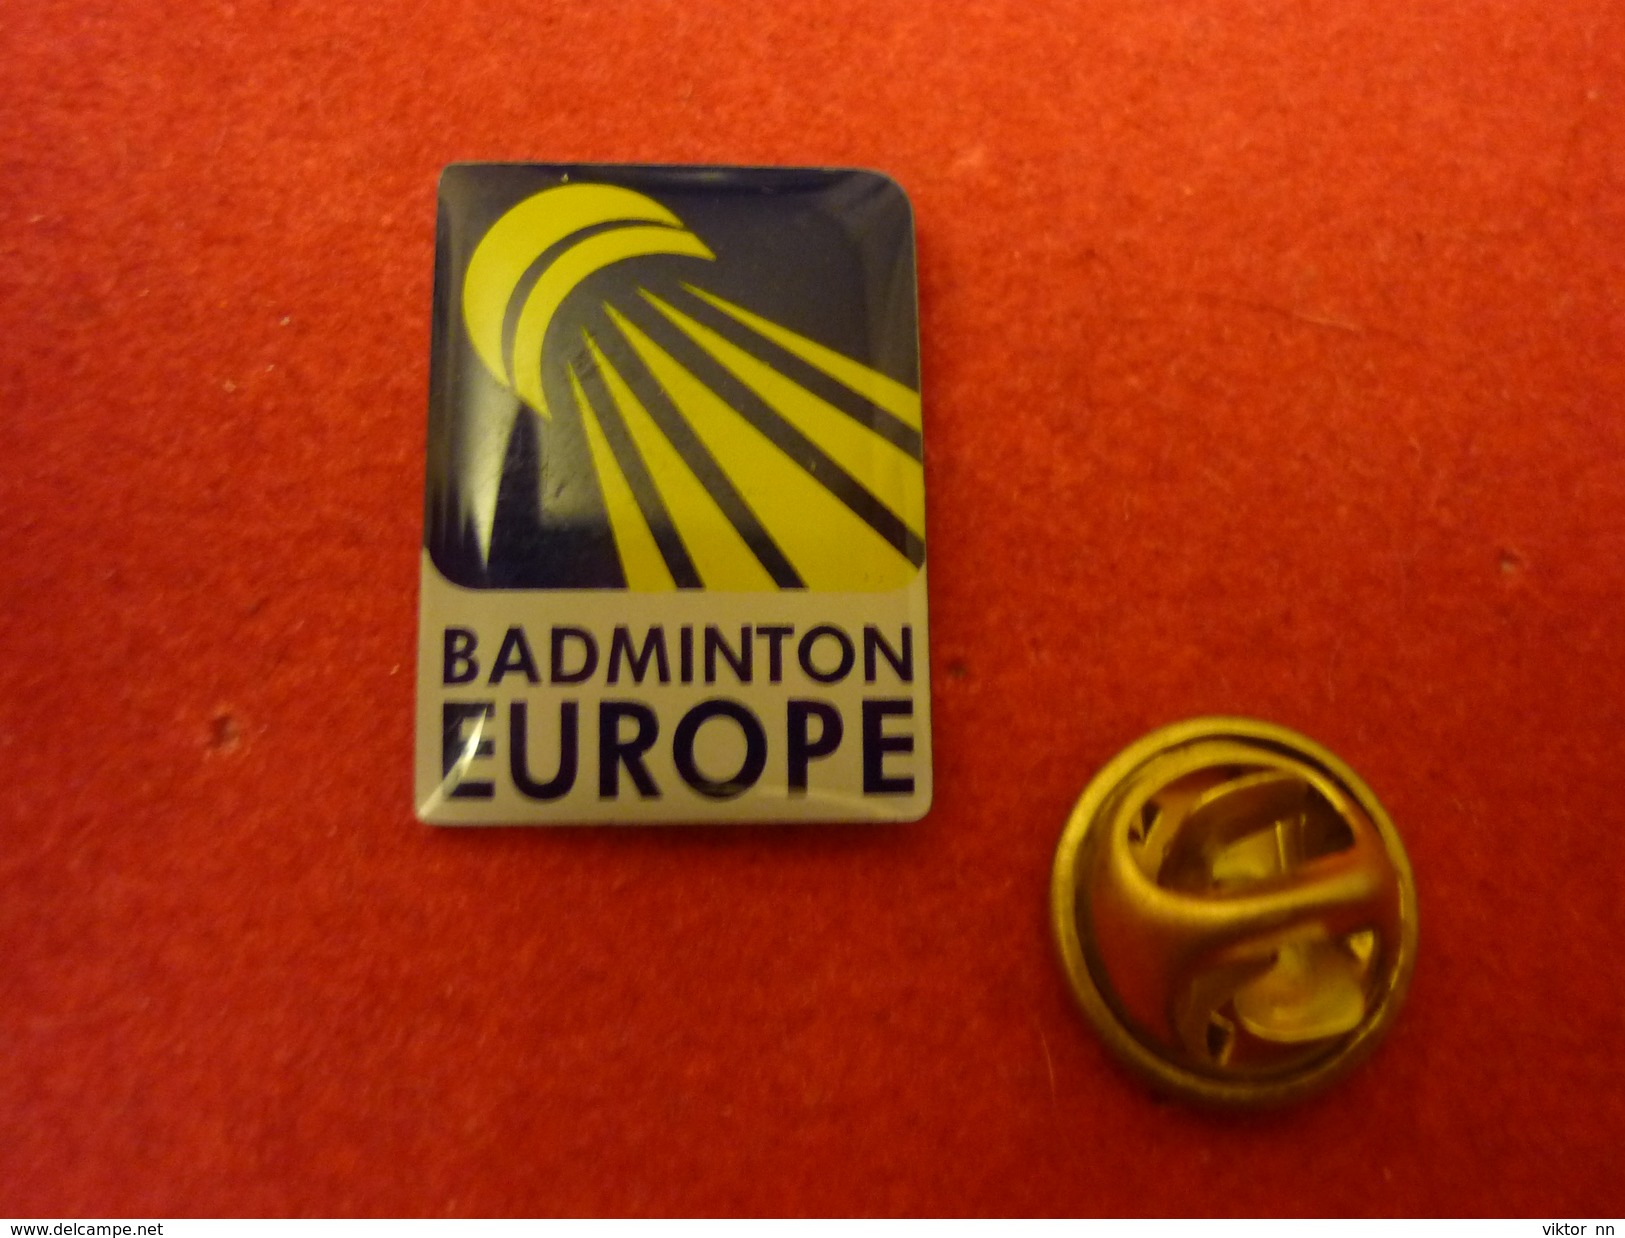 Badminton Europe - Pin Badge - Badminton